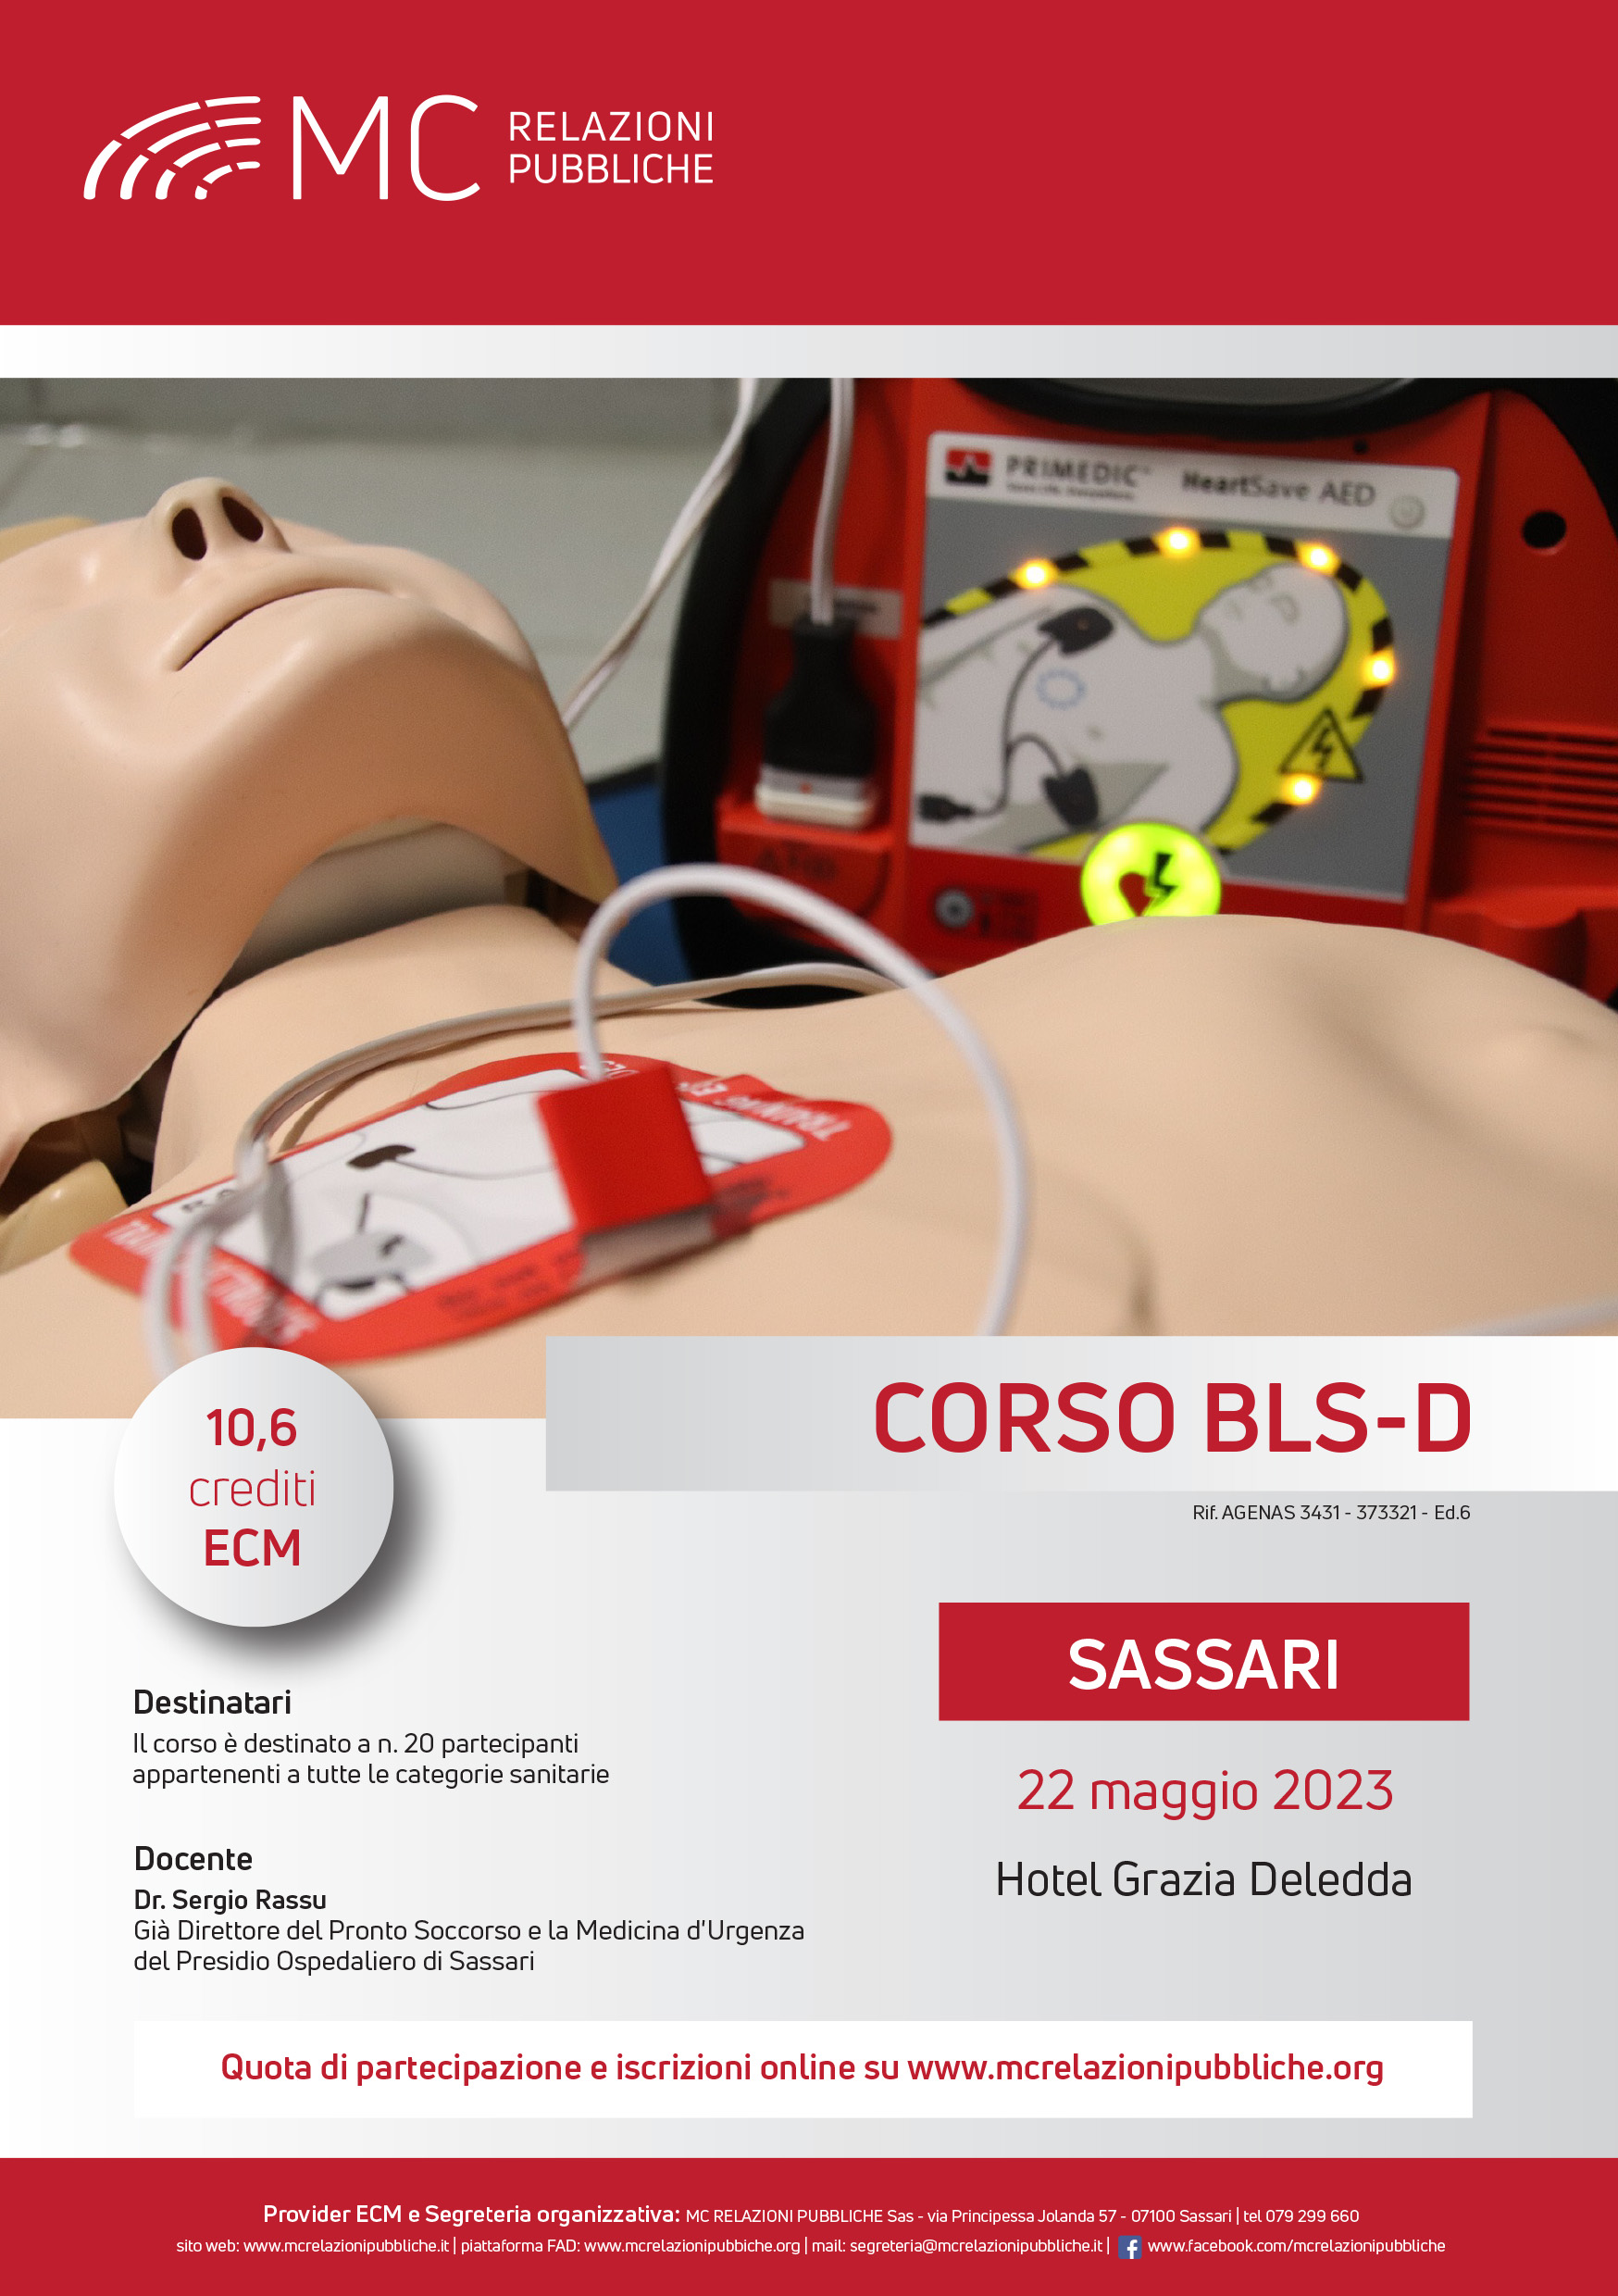 Corso BLS-D. Basic life support-defibrillation ed.6